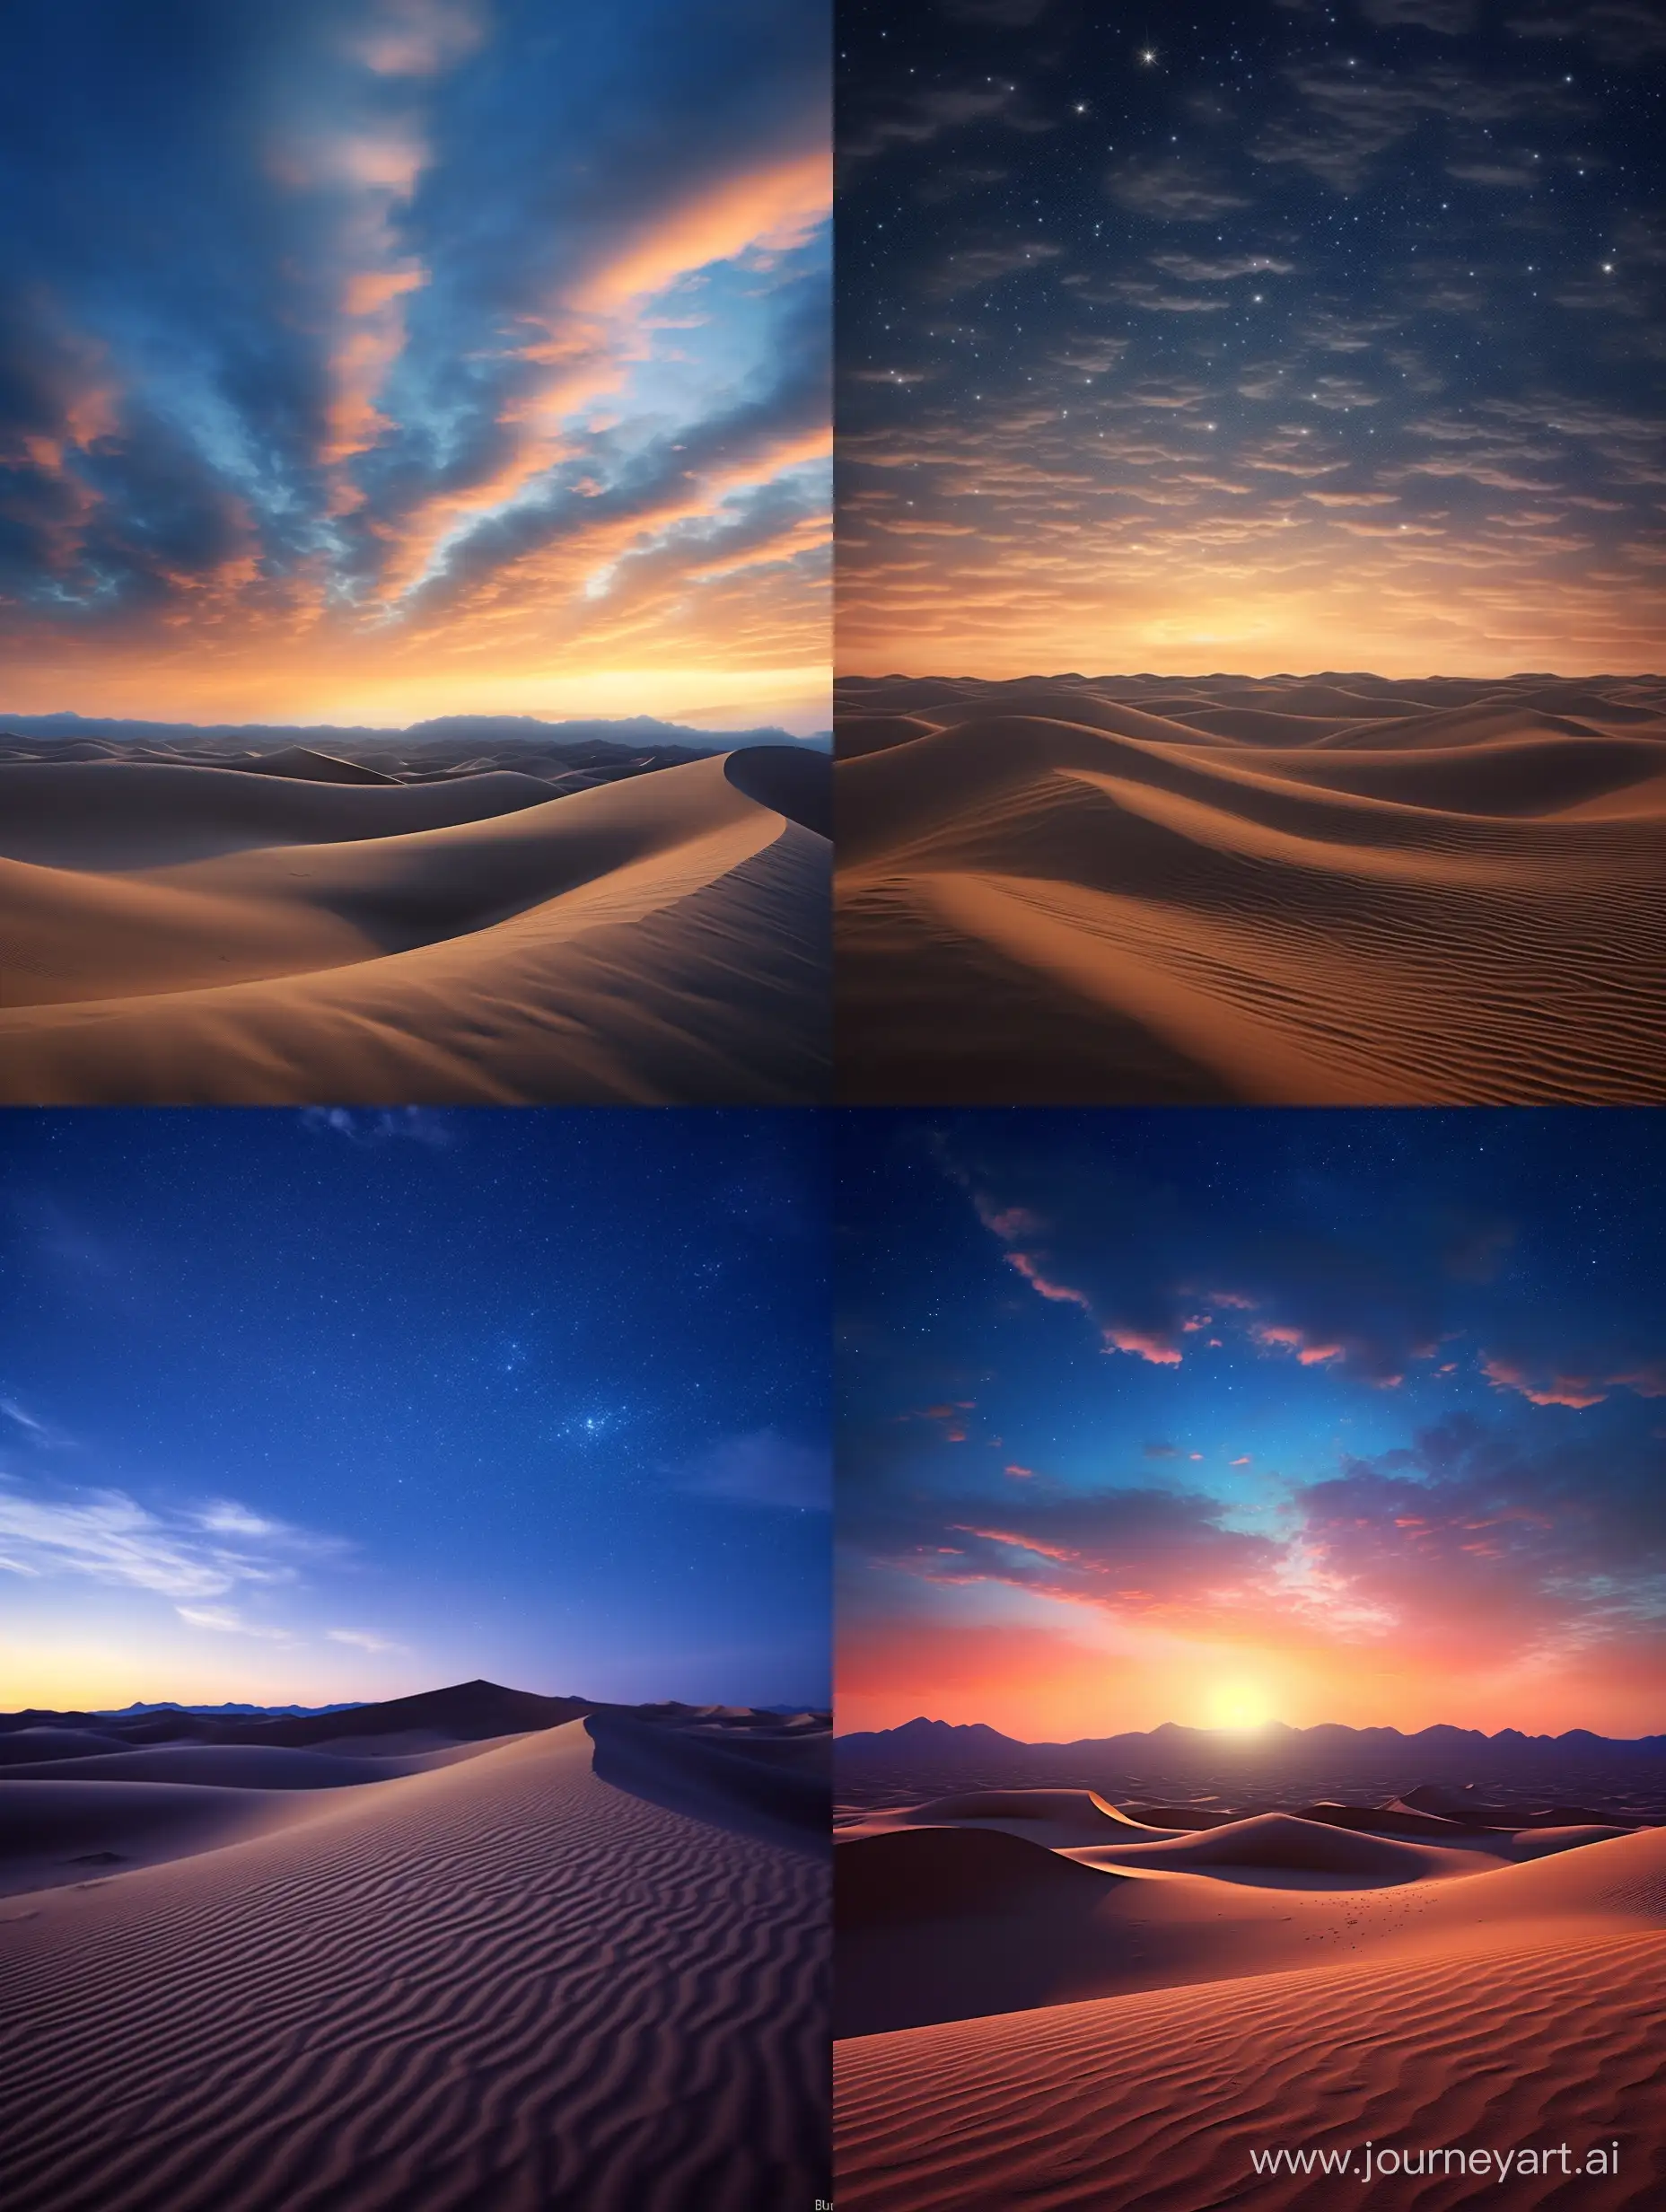 Twilight-Desert-Landscape-Golden-Sand-Dunes-and-Celestial-Constellations